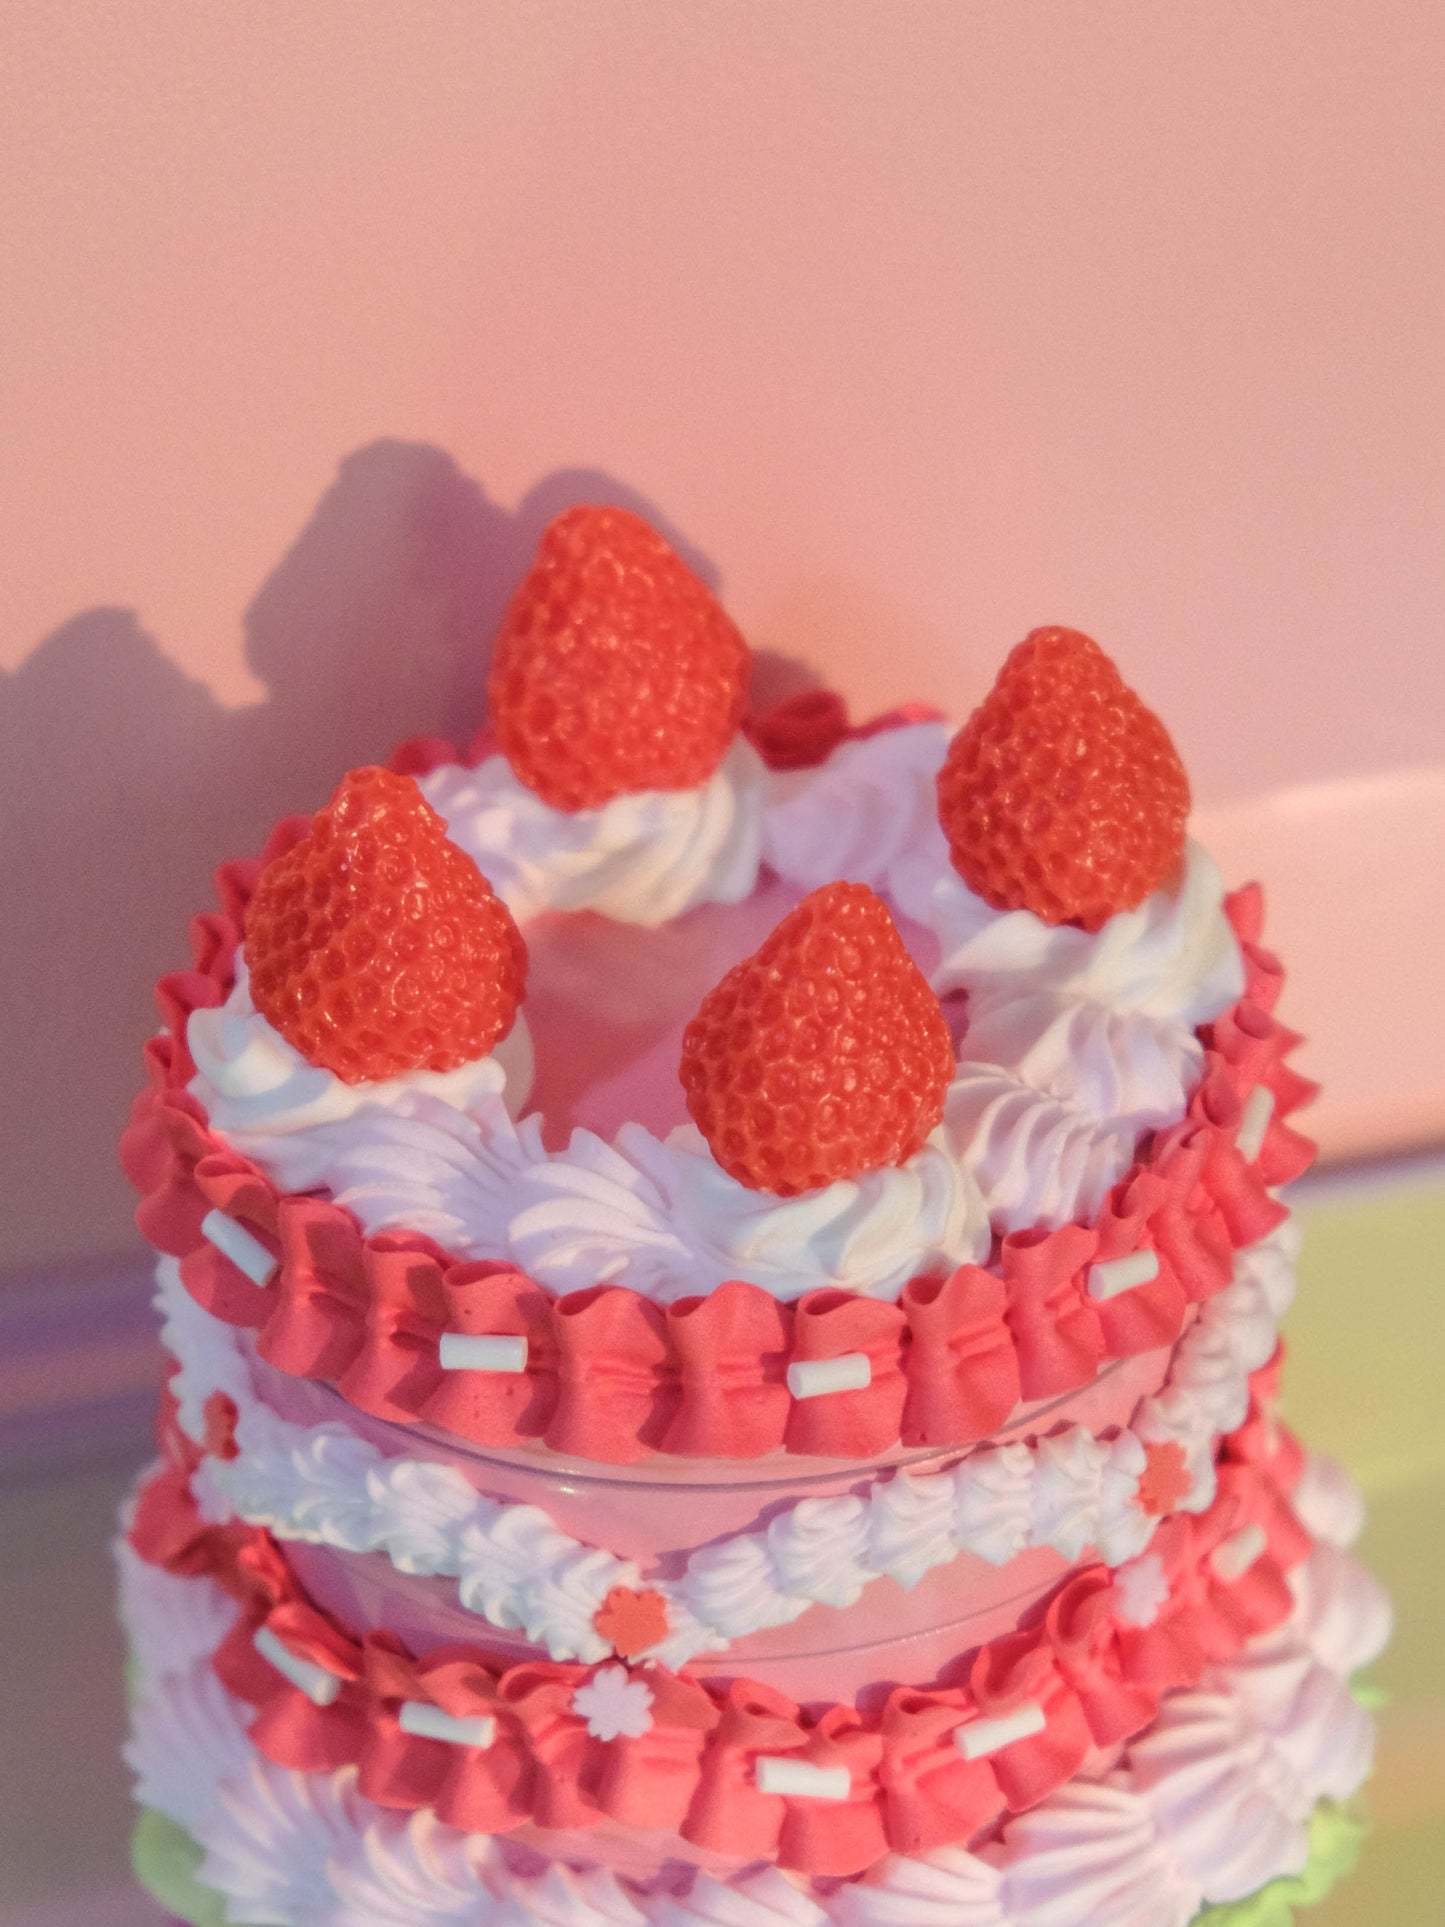 Strawberry Pudding Cake - Grinder